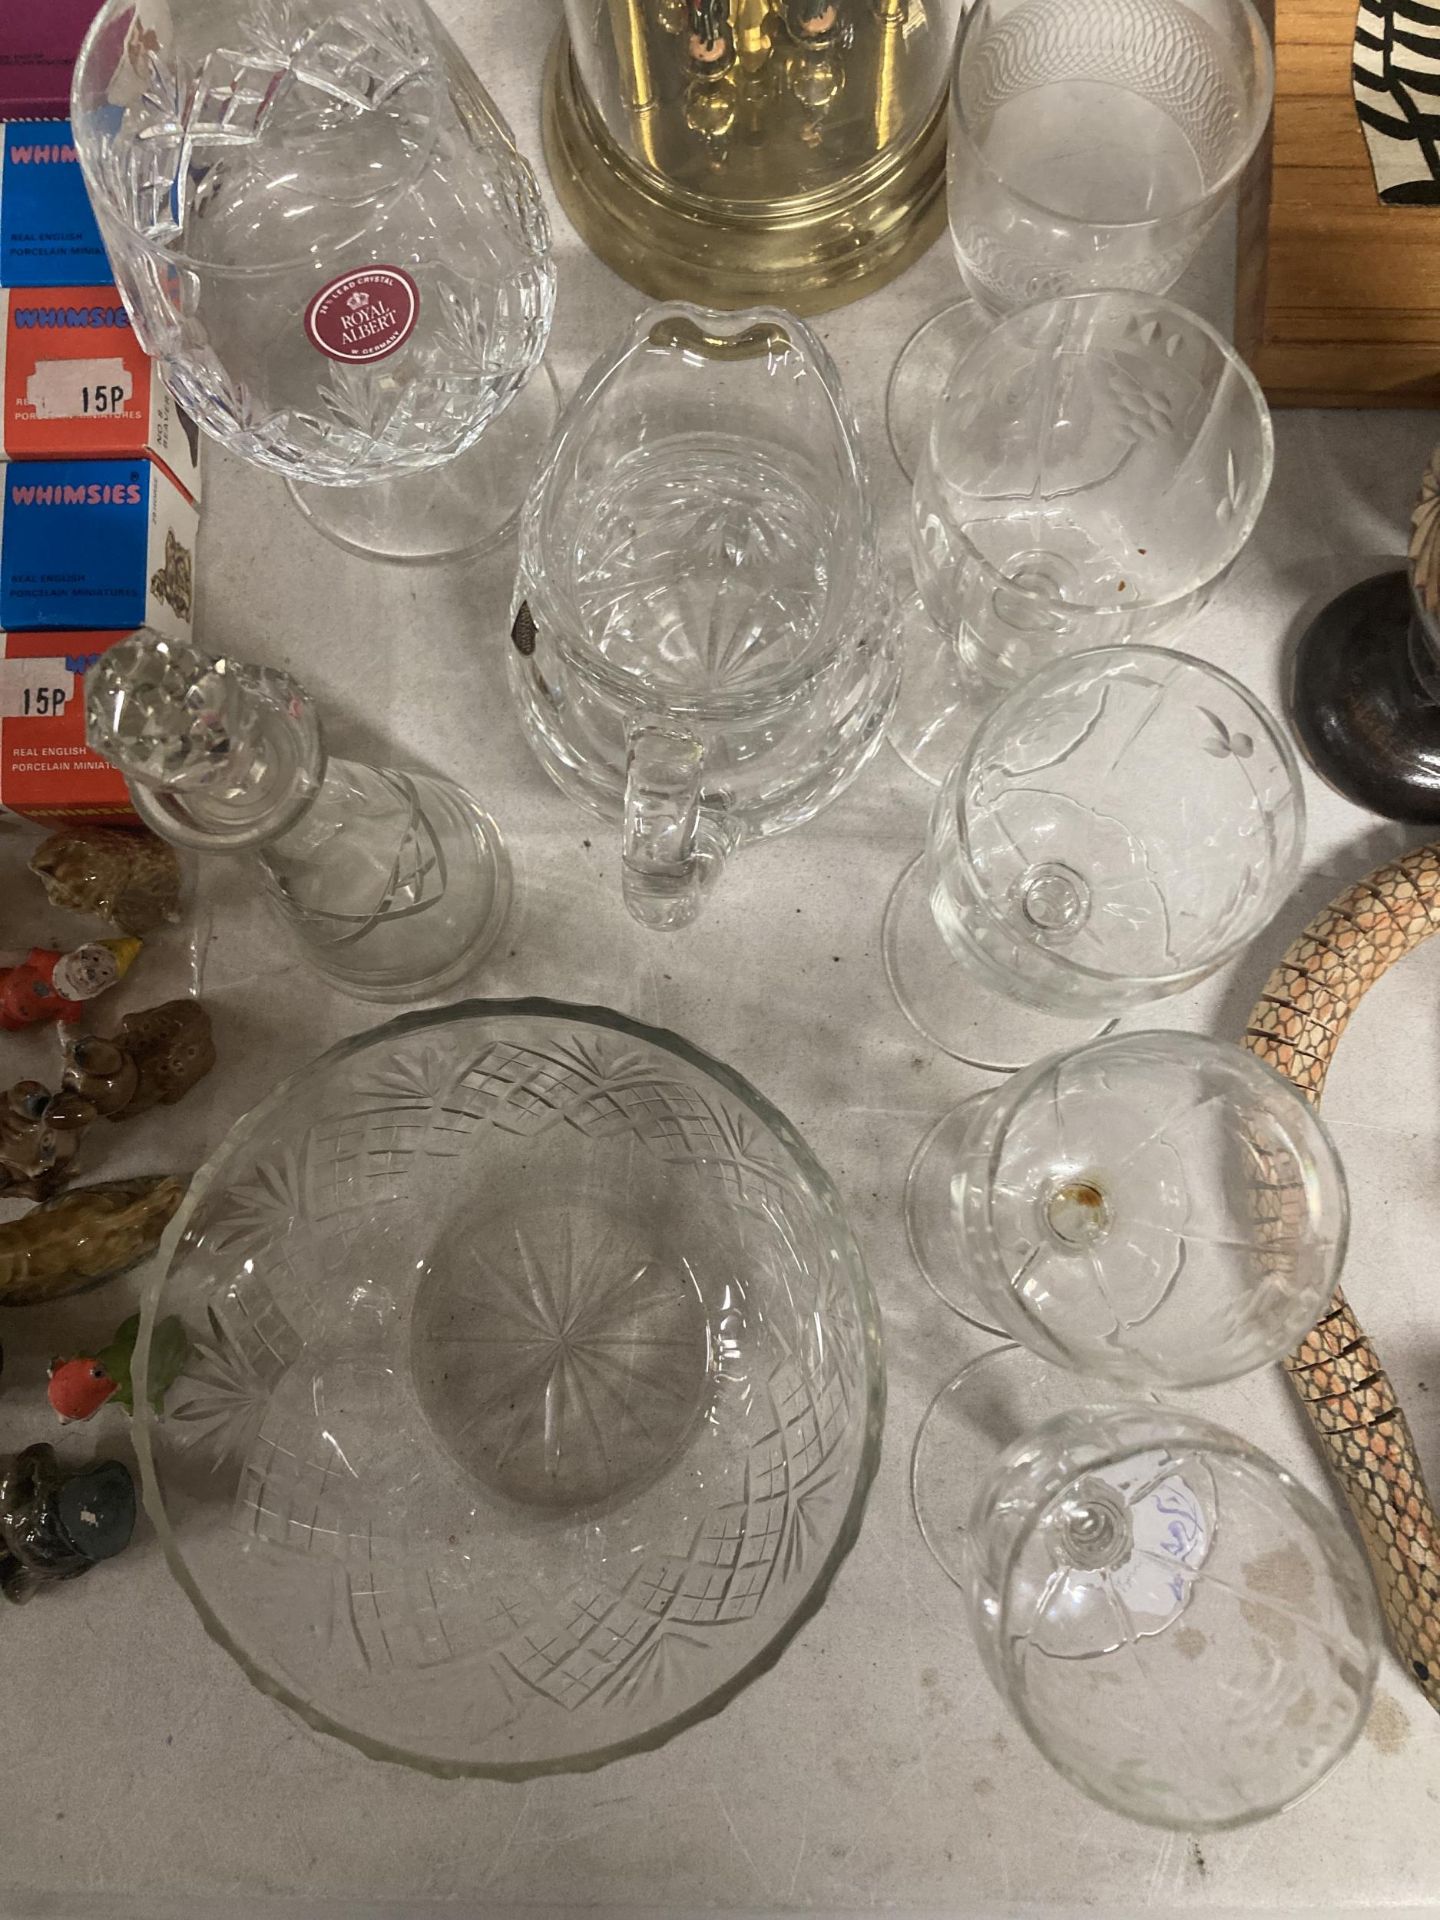 A QUANTITY OF GLASSWARE TO INCLUDE AN ANNIVERSARY CLOCK, DESSERT BOWLS, VINEGAR BOTTLE, ROYAL ALBERT - Bild 5 aus 5